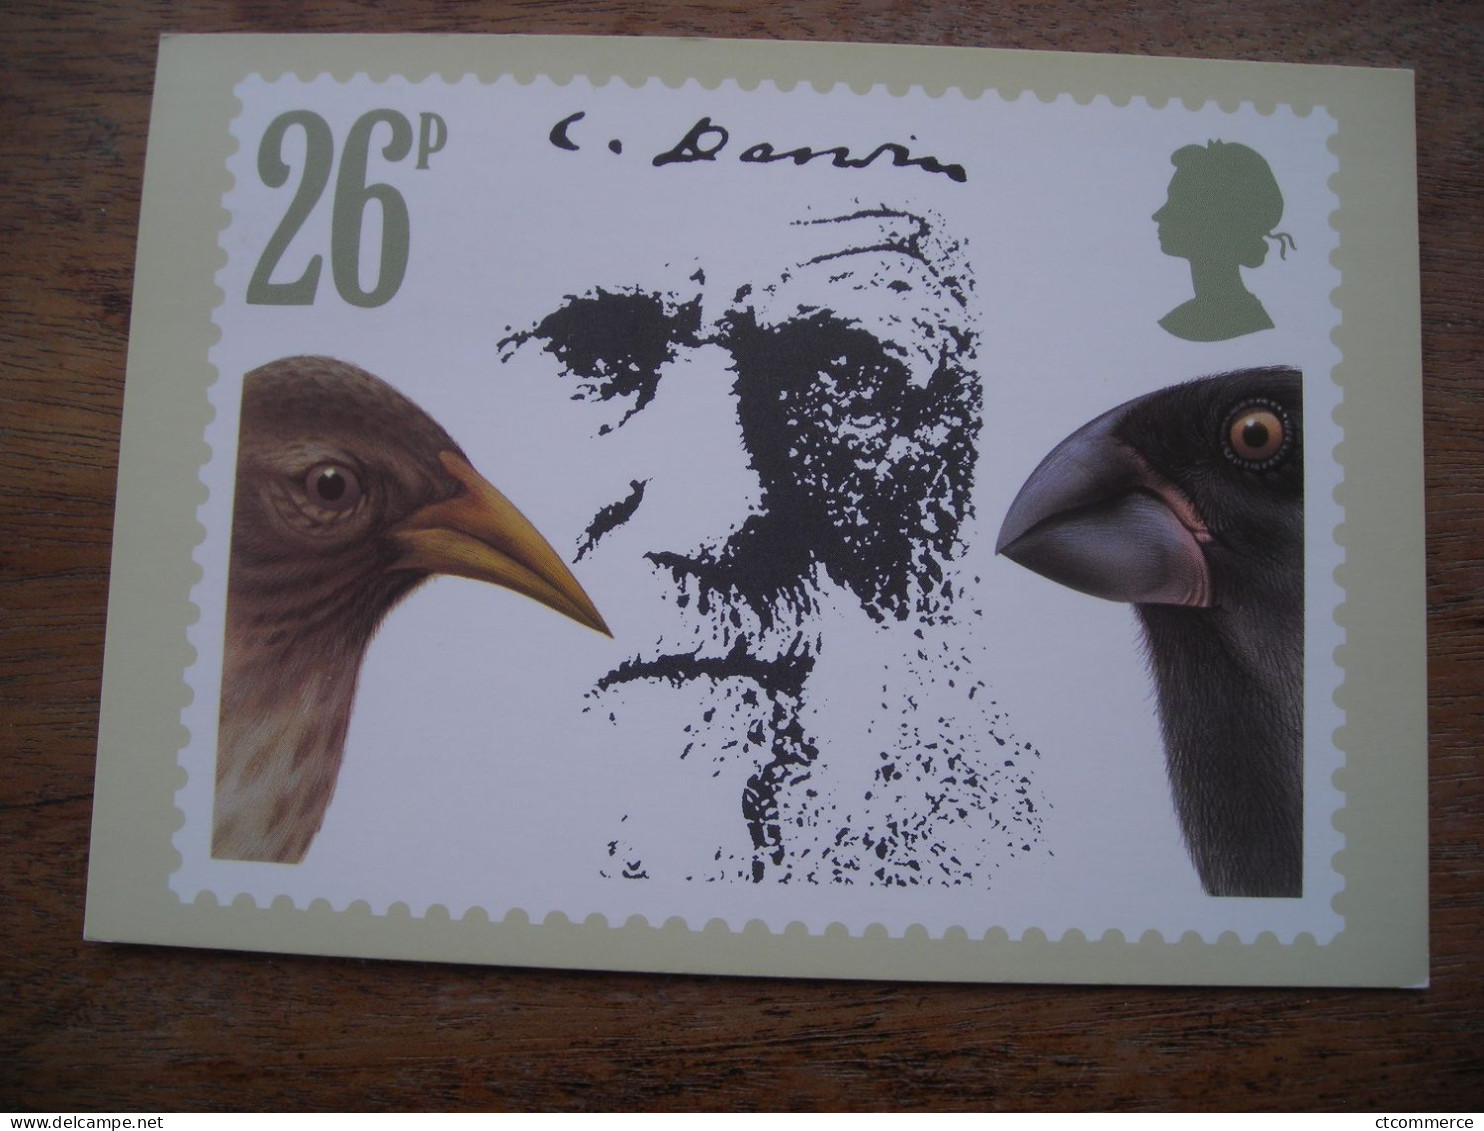 2 Cartes Postales, Premier Jour Charles Darwin Finches Pinsons, Iguanas - PHQ Karten